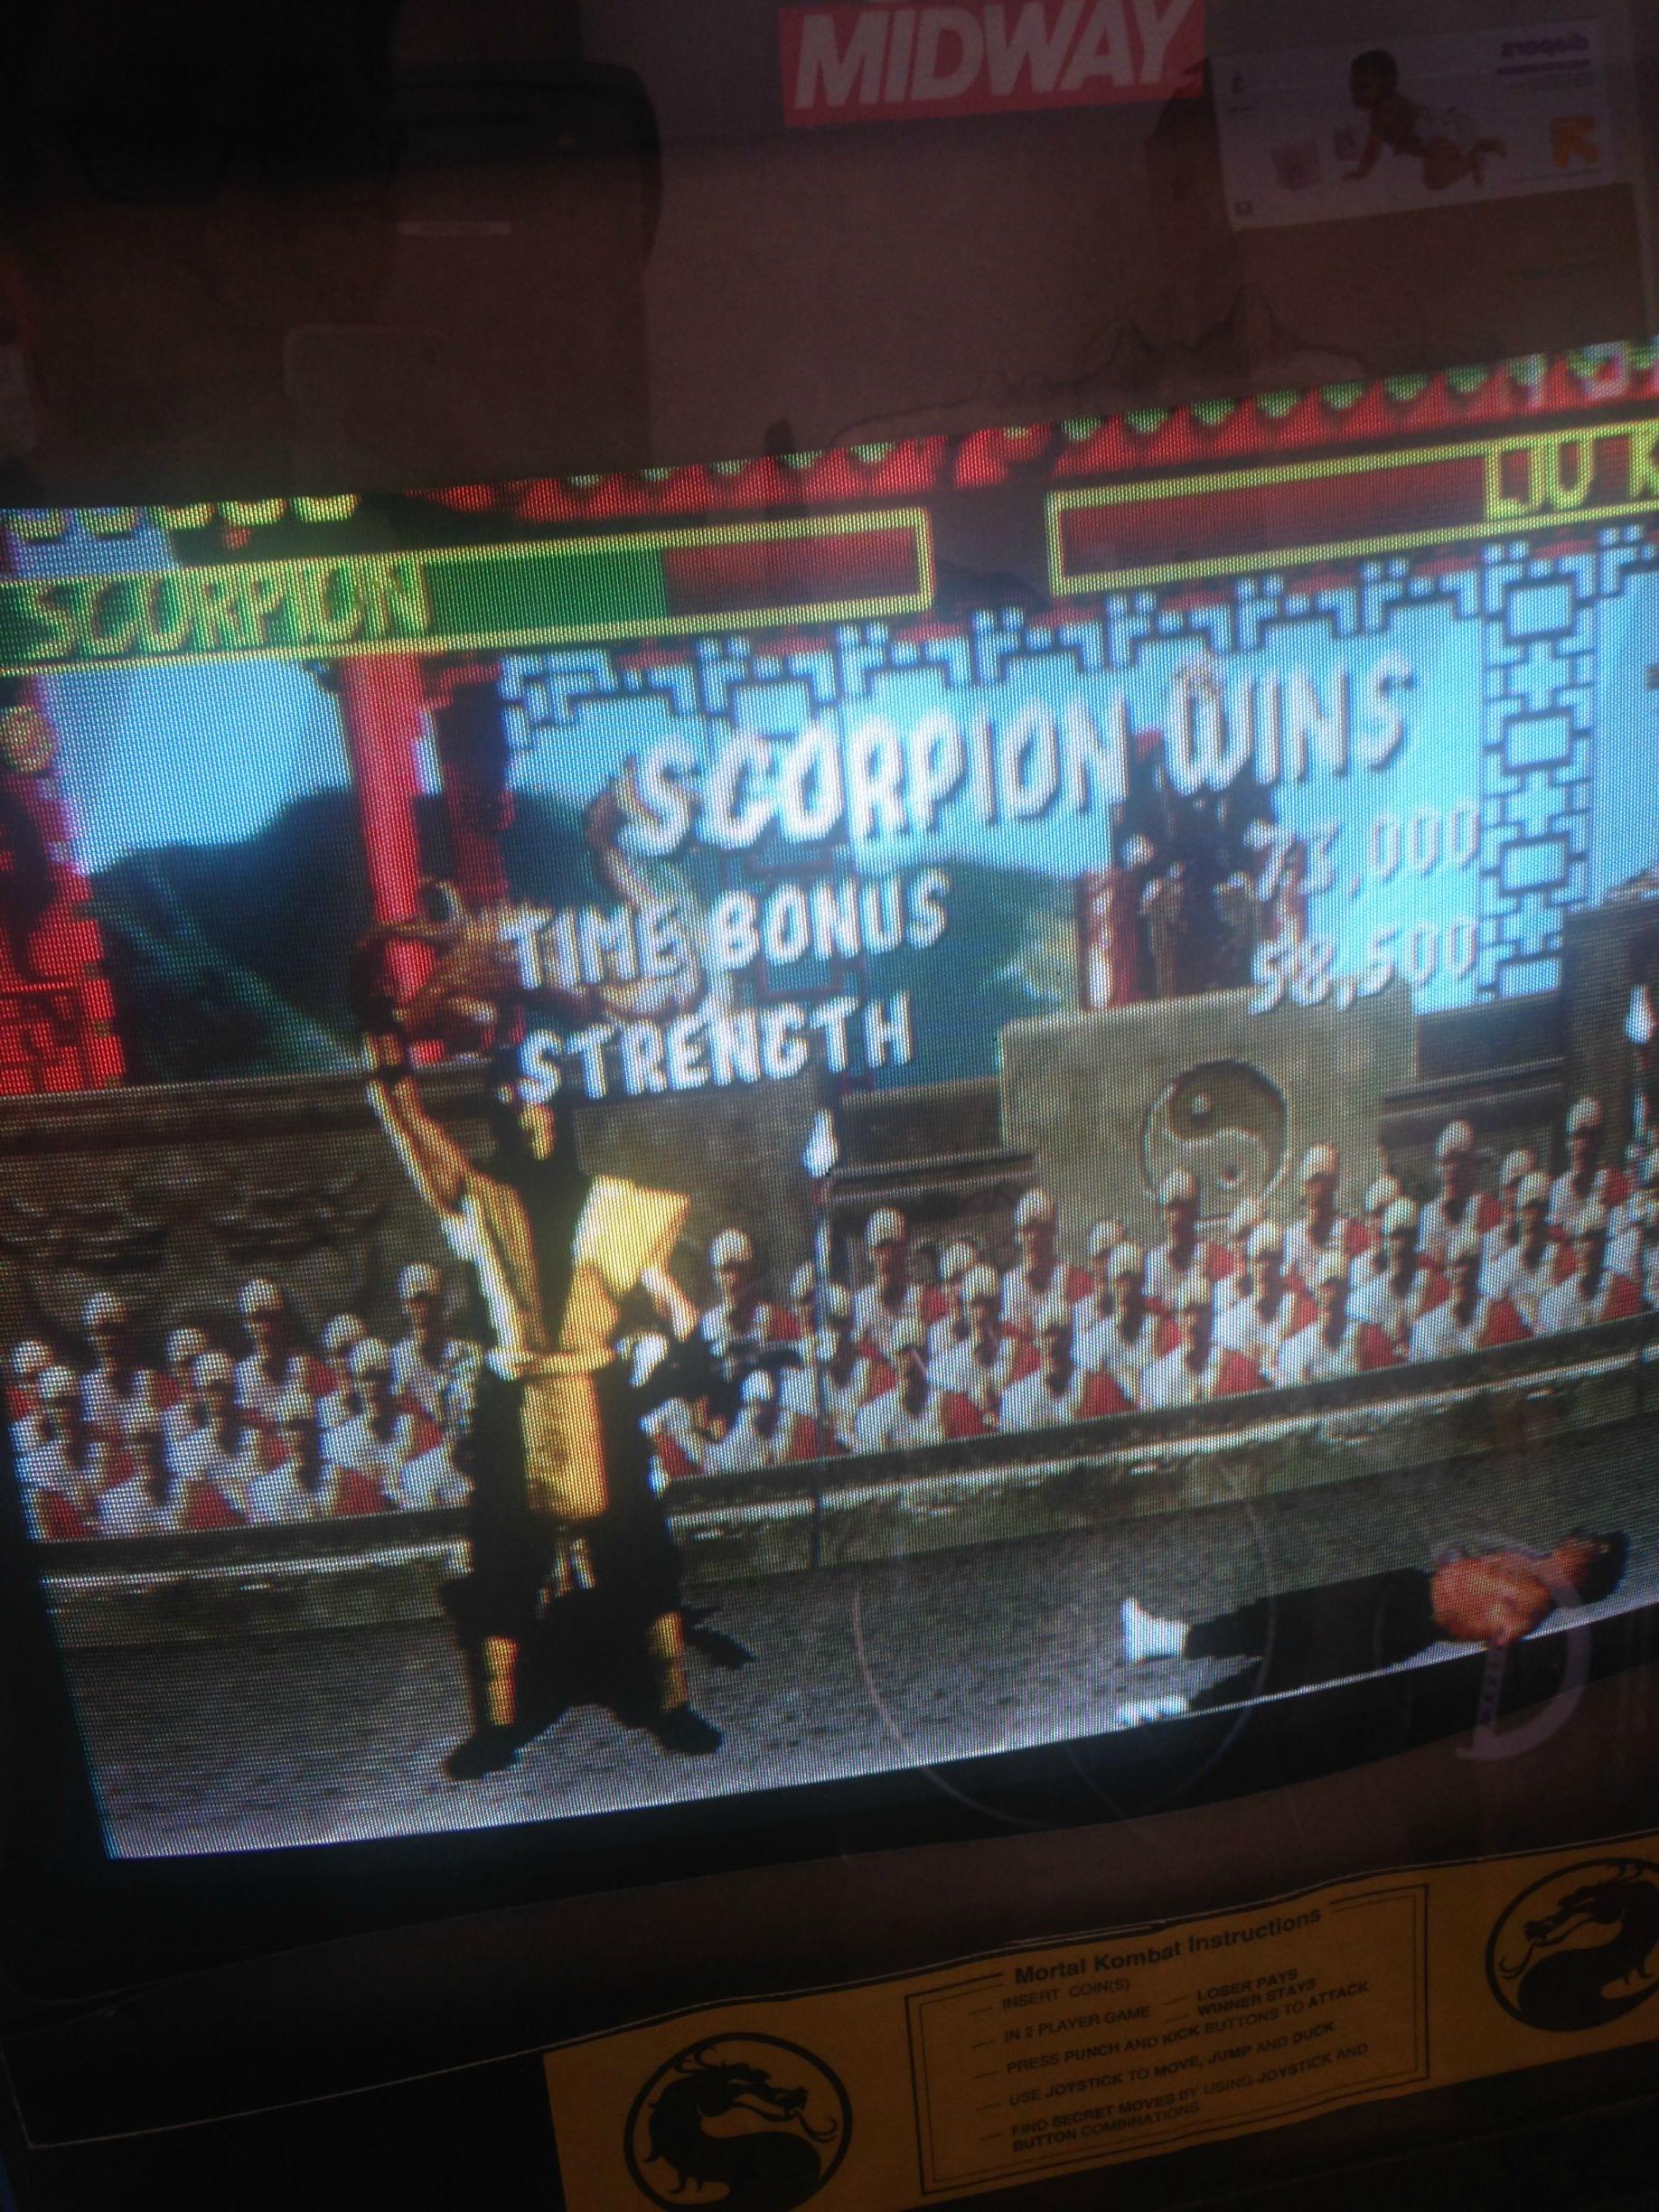 Scorpion wins! Fatality!